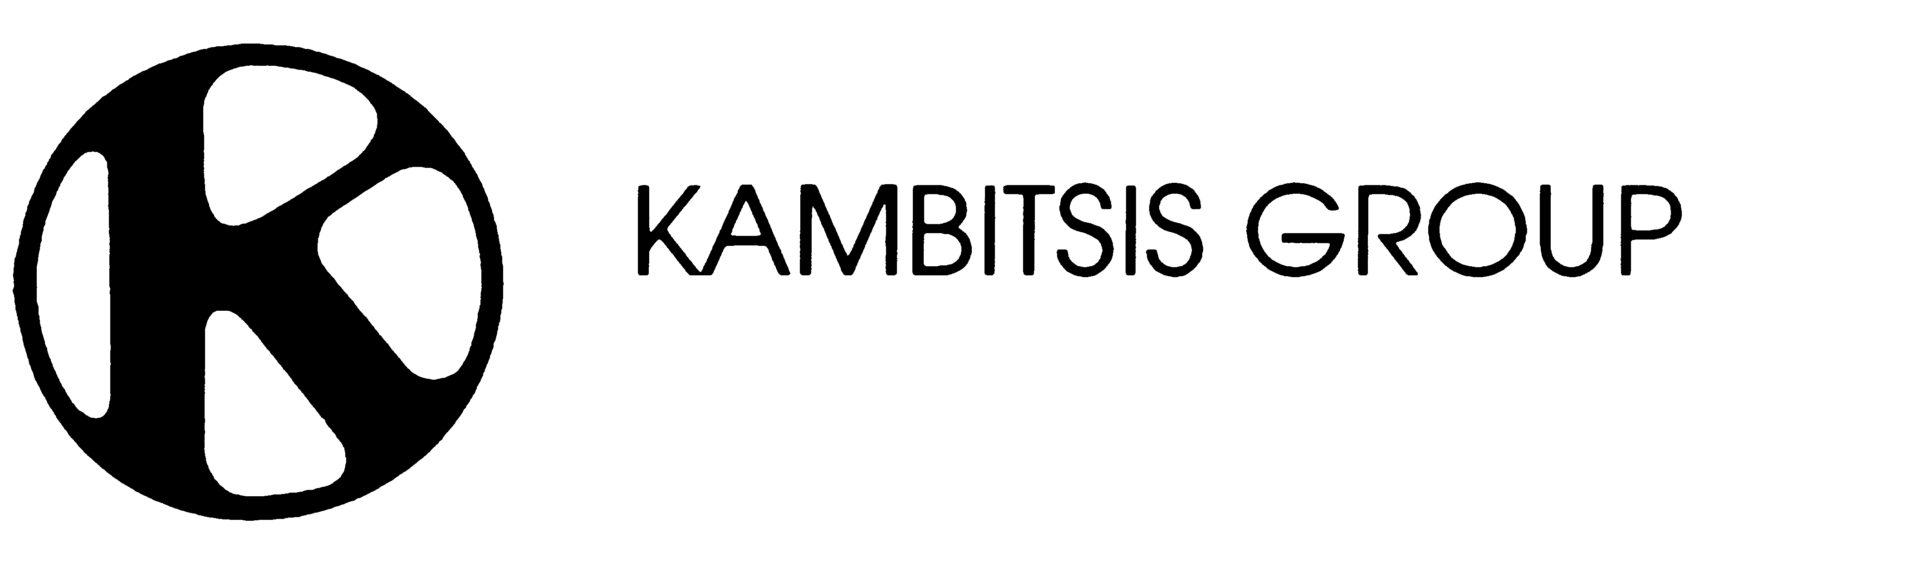 Kambitsis Group